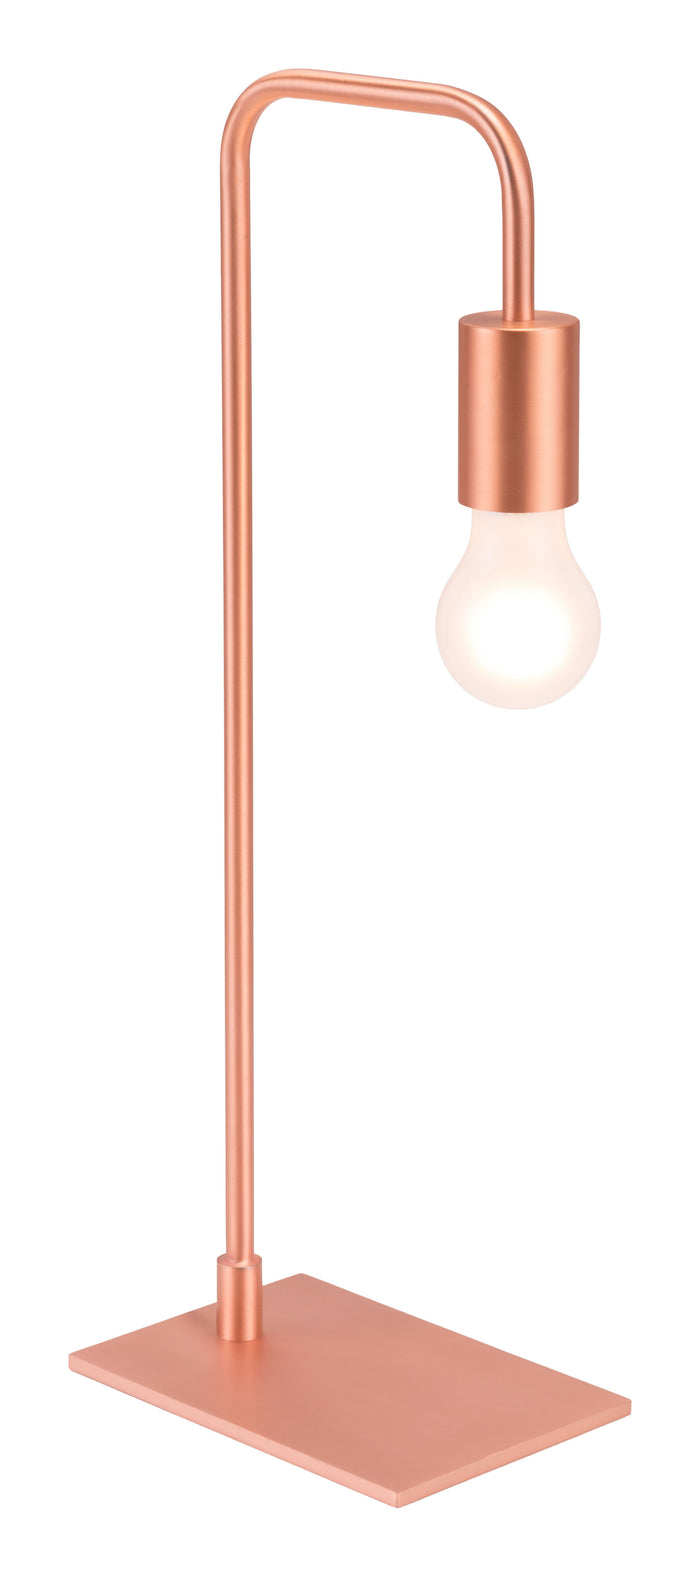 Martia Table Lamps